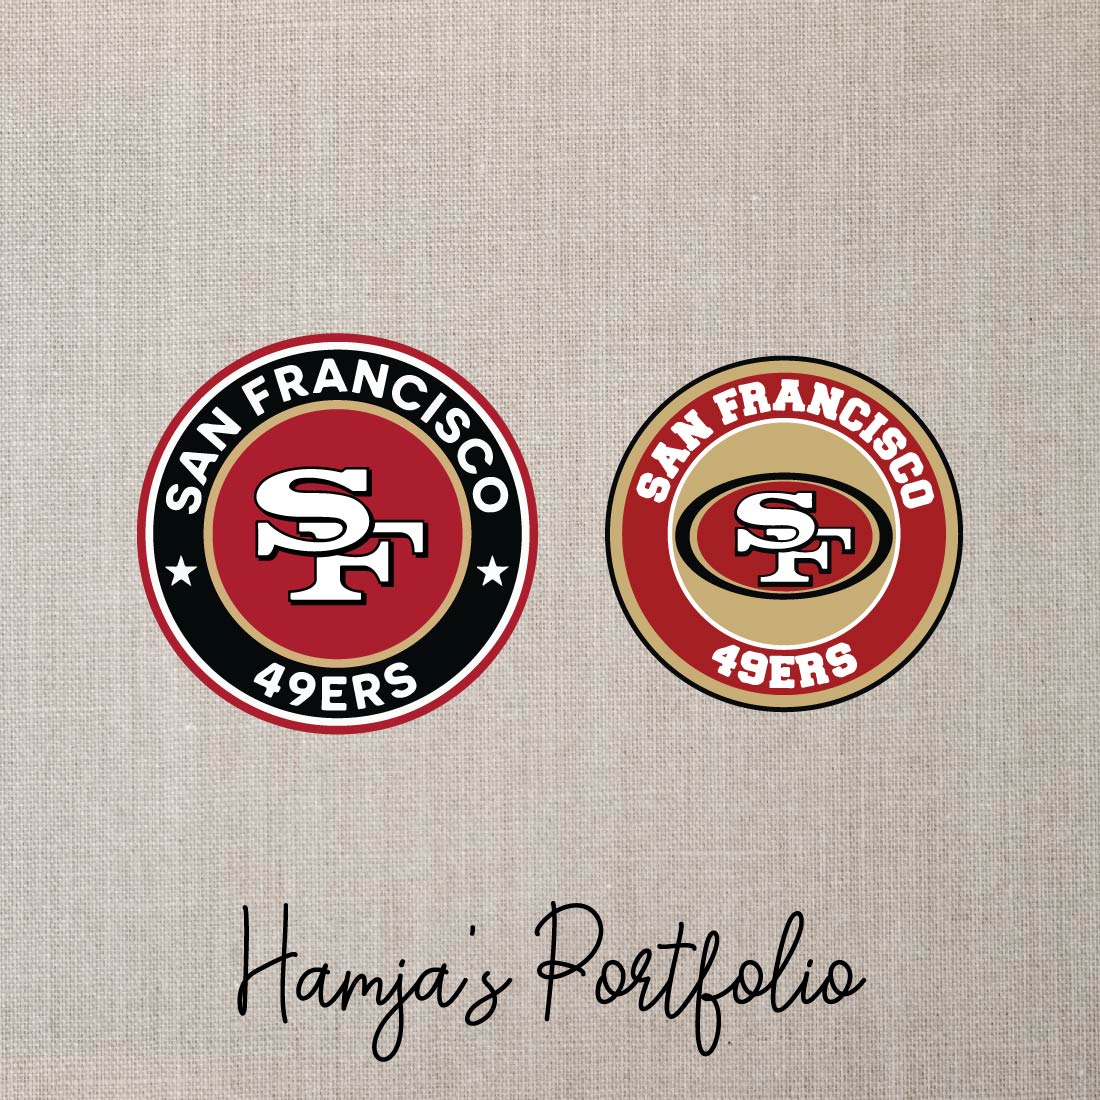 San Francisco 49ERS Logo Vector Set - MasterBundles